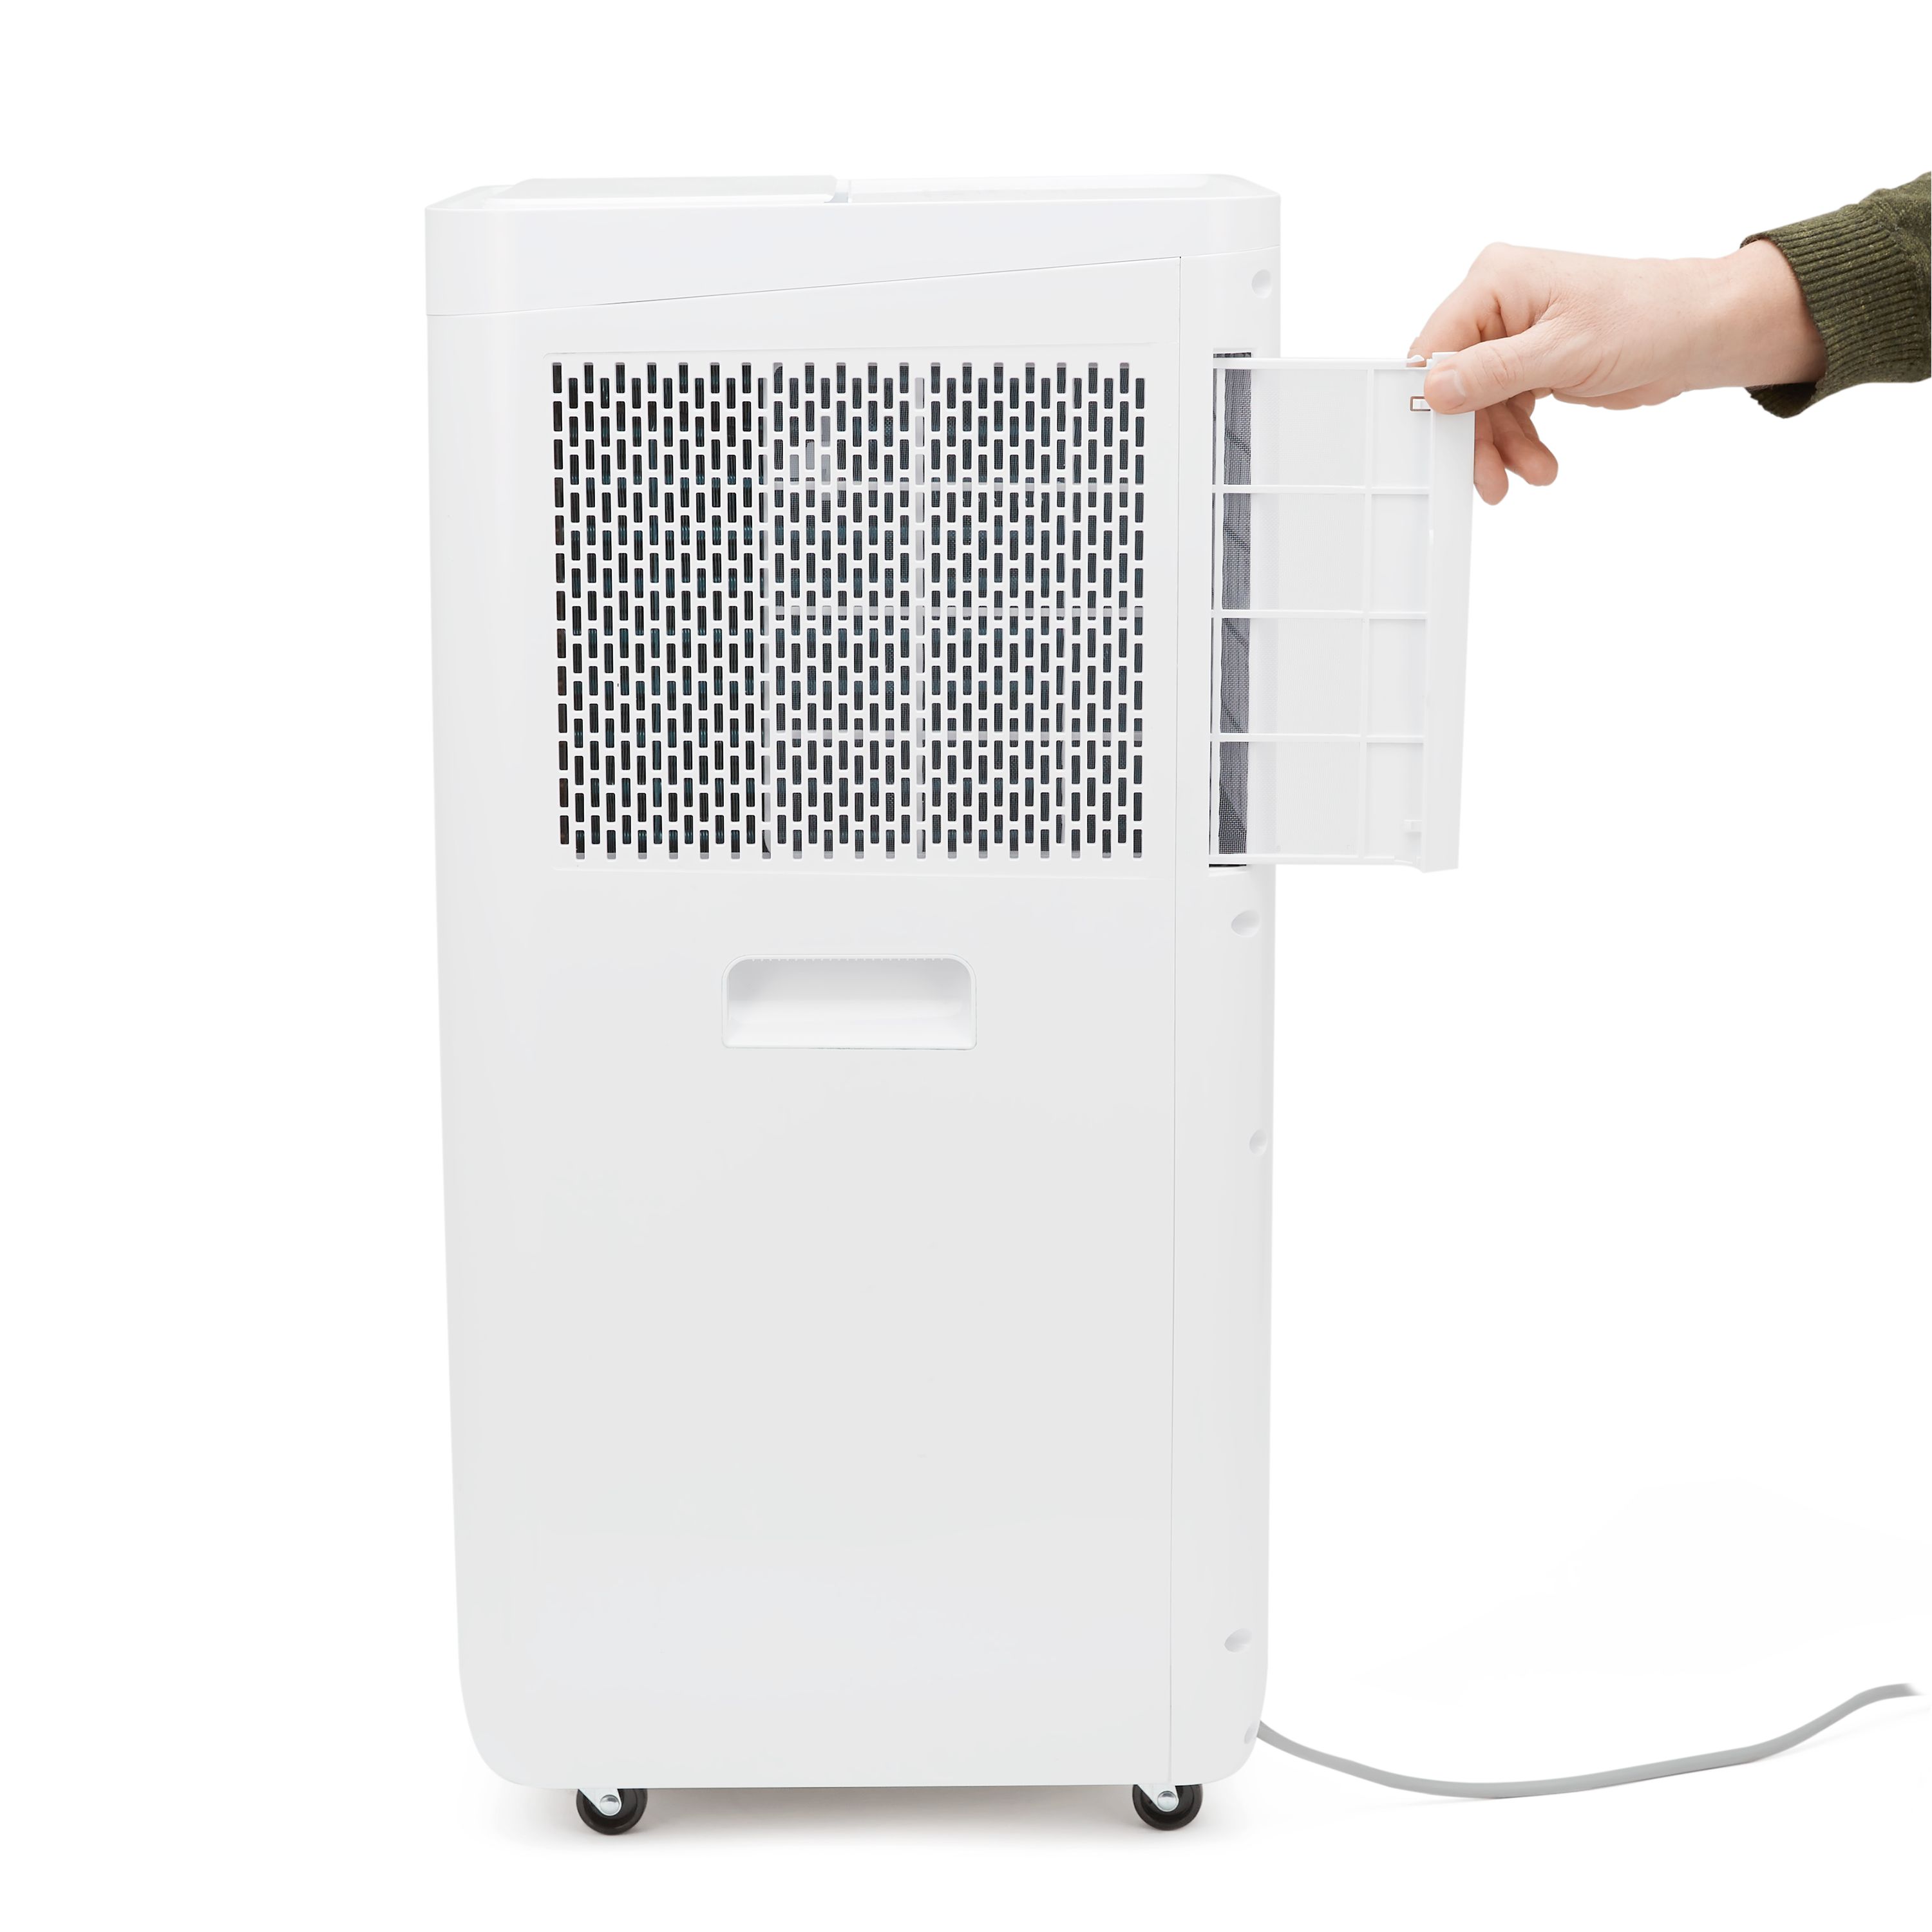 Wood's Como 12000BTU Freestanding Smart Air conditioner